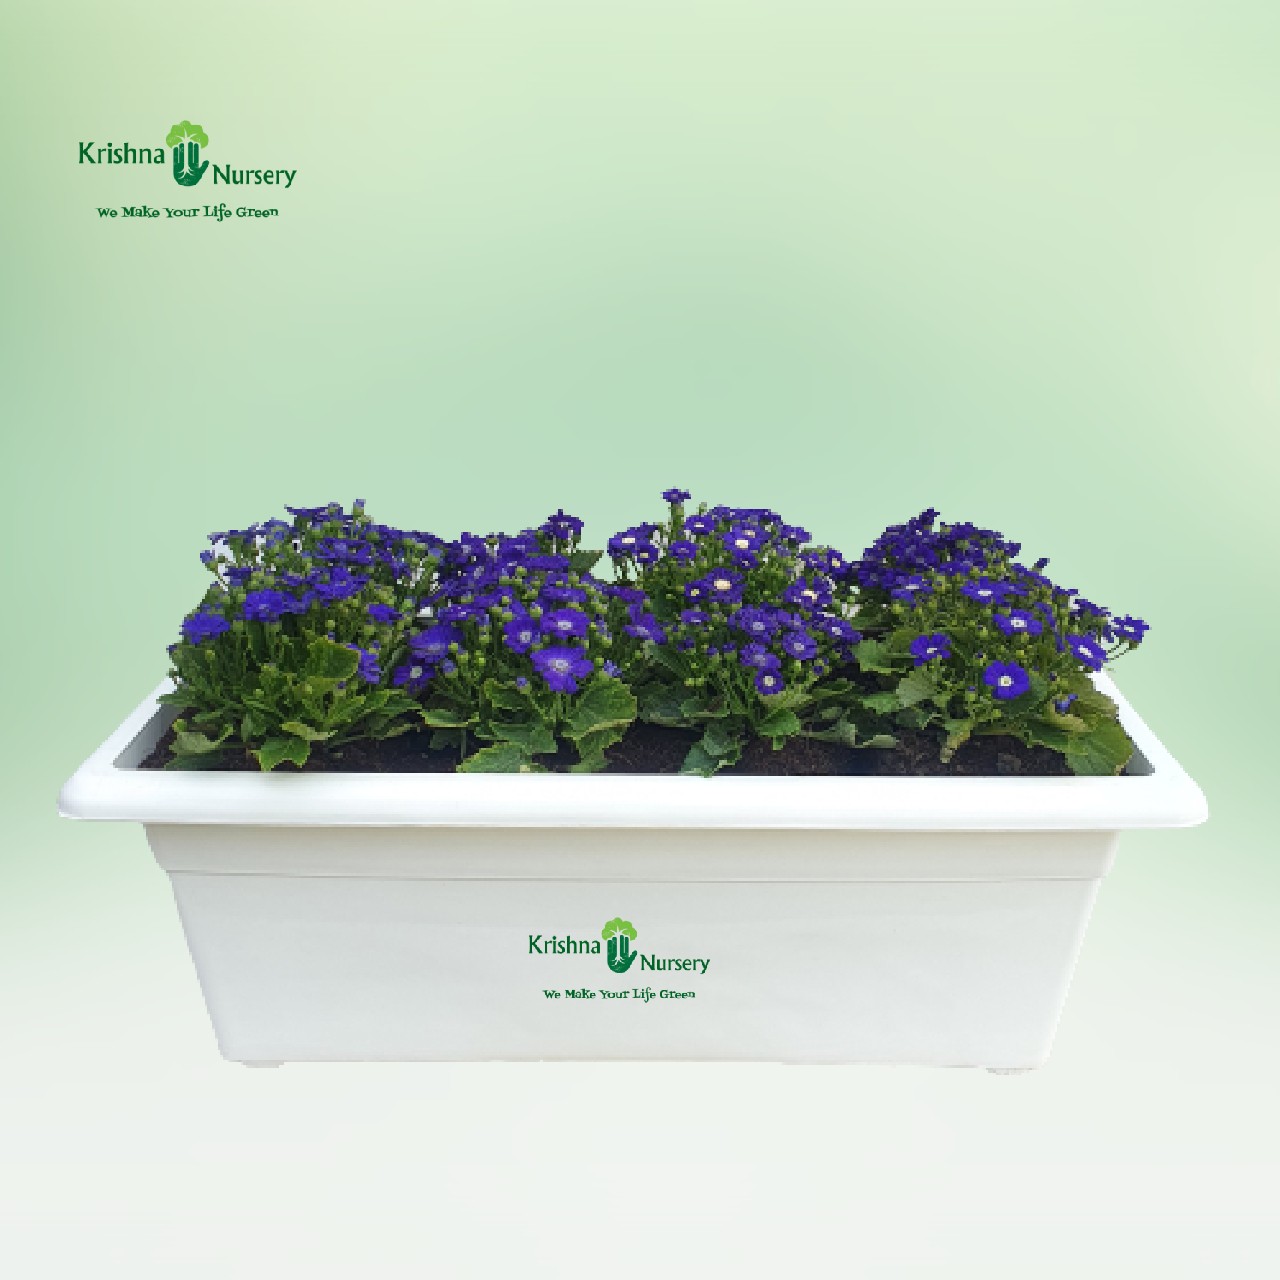 Cineraria  Plant - Blue Flower - Winter Season Plants -  - cineraria-plant-blue-flower -   